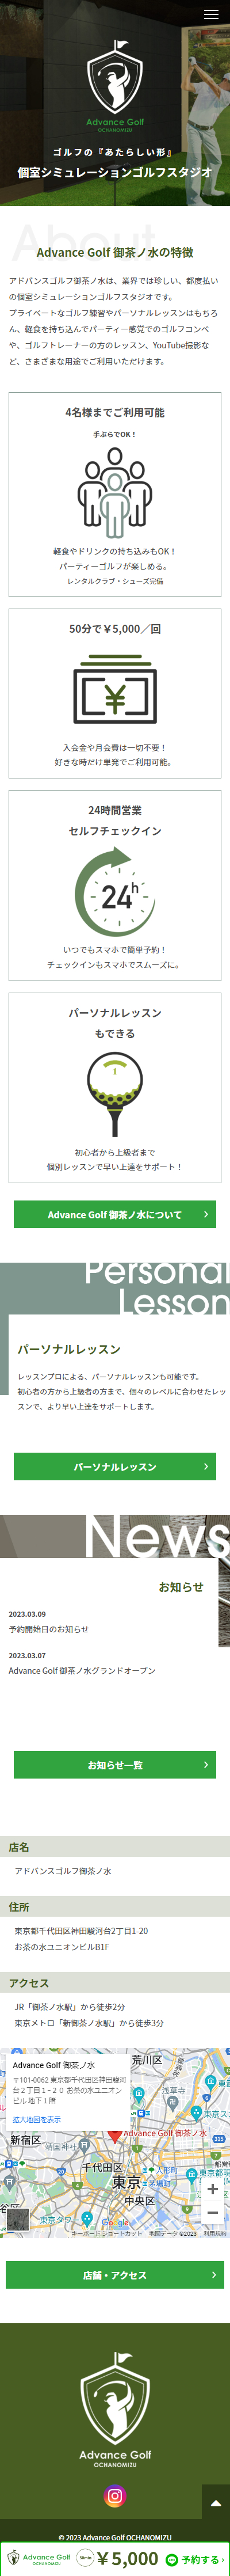 Advance Golf